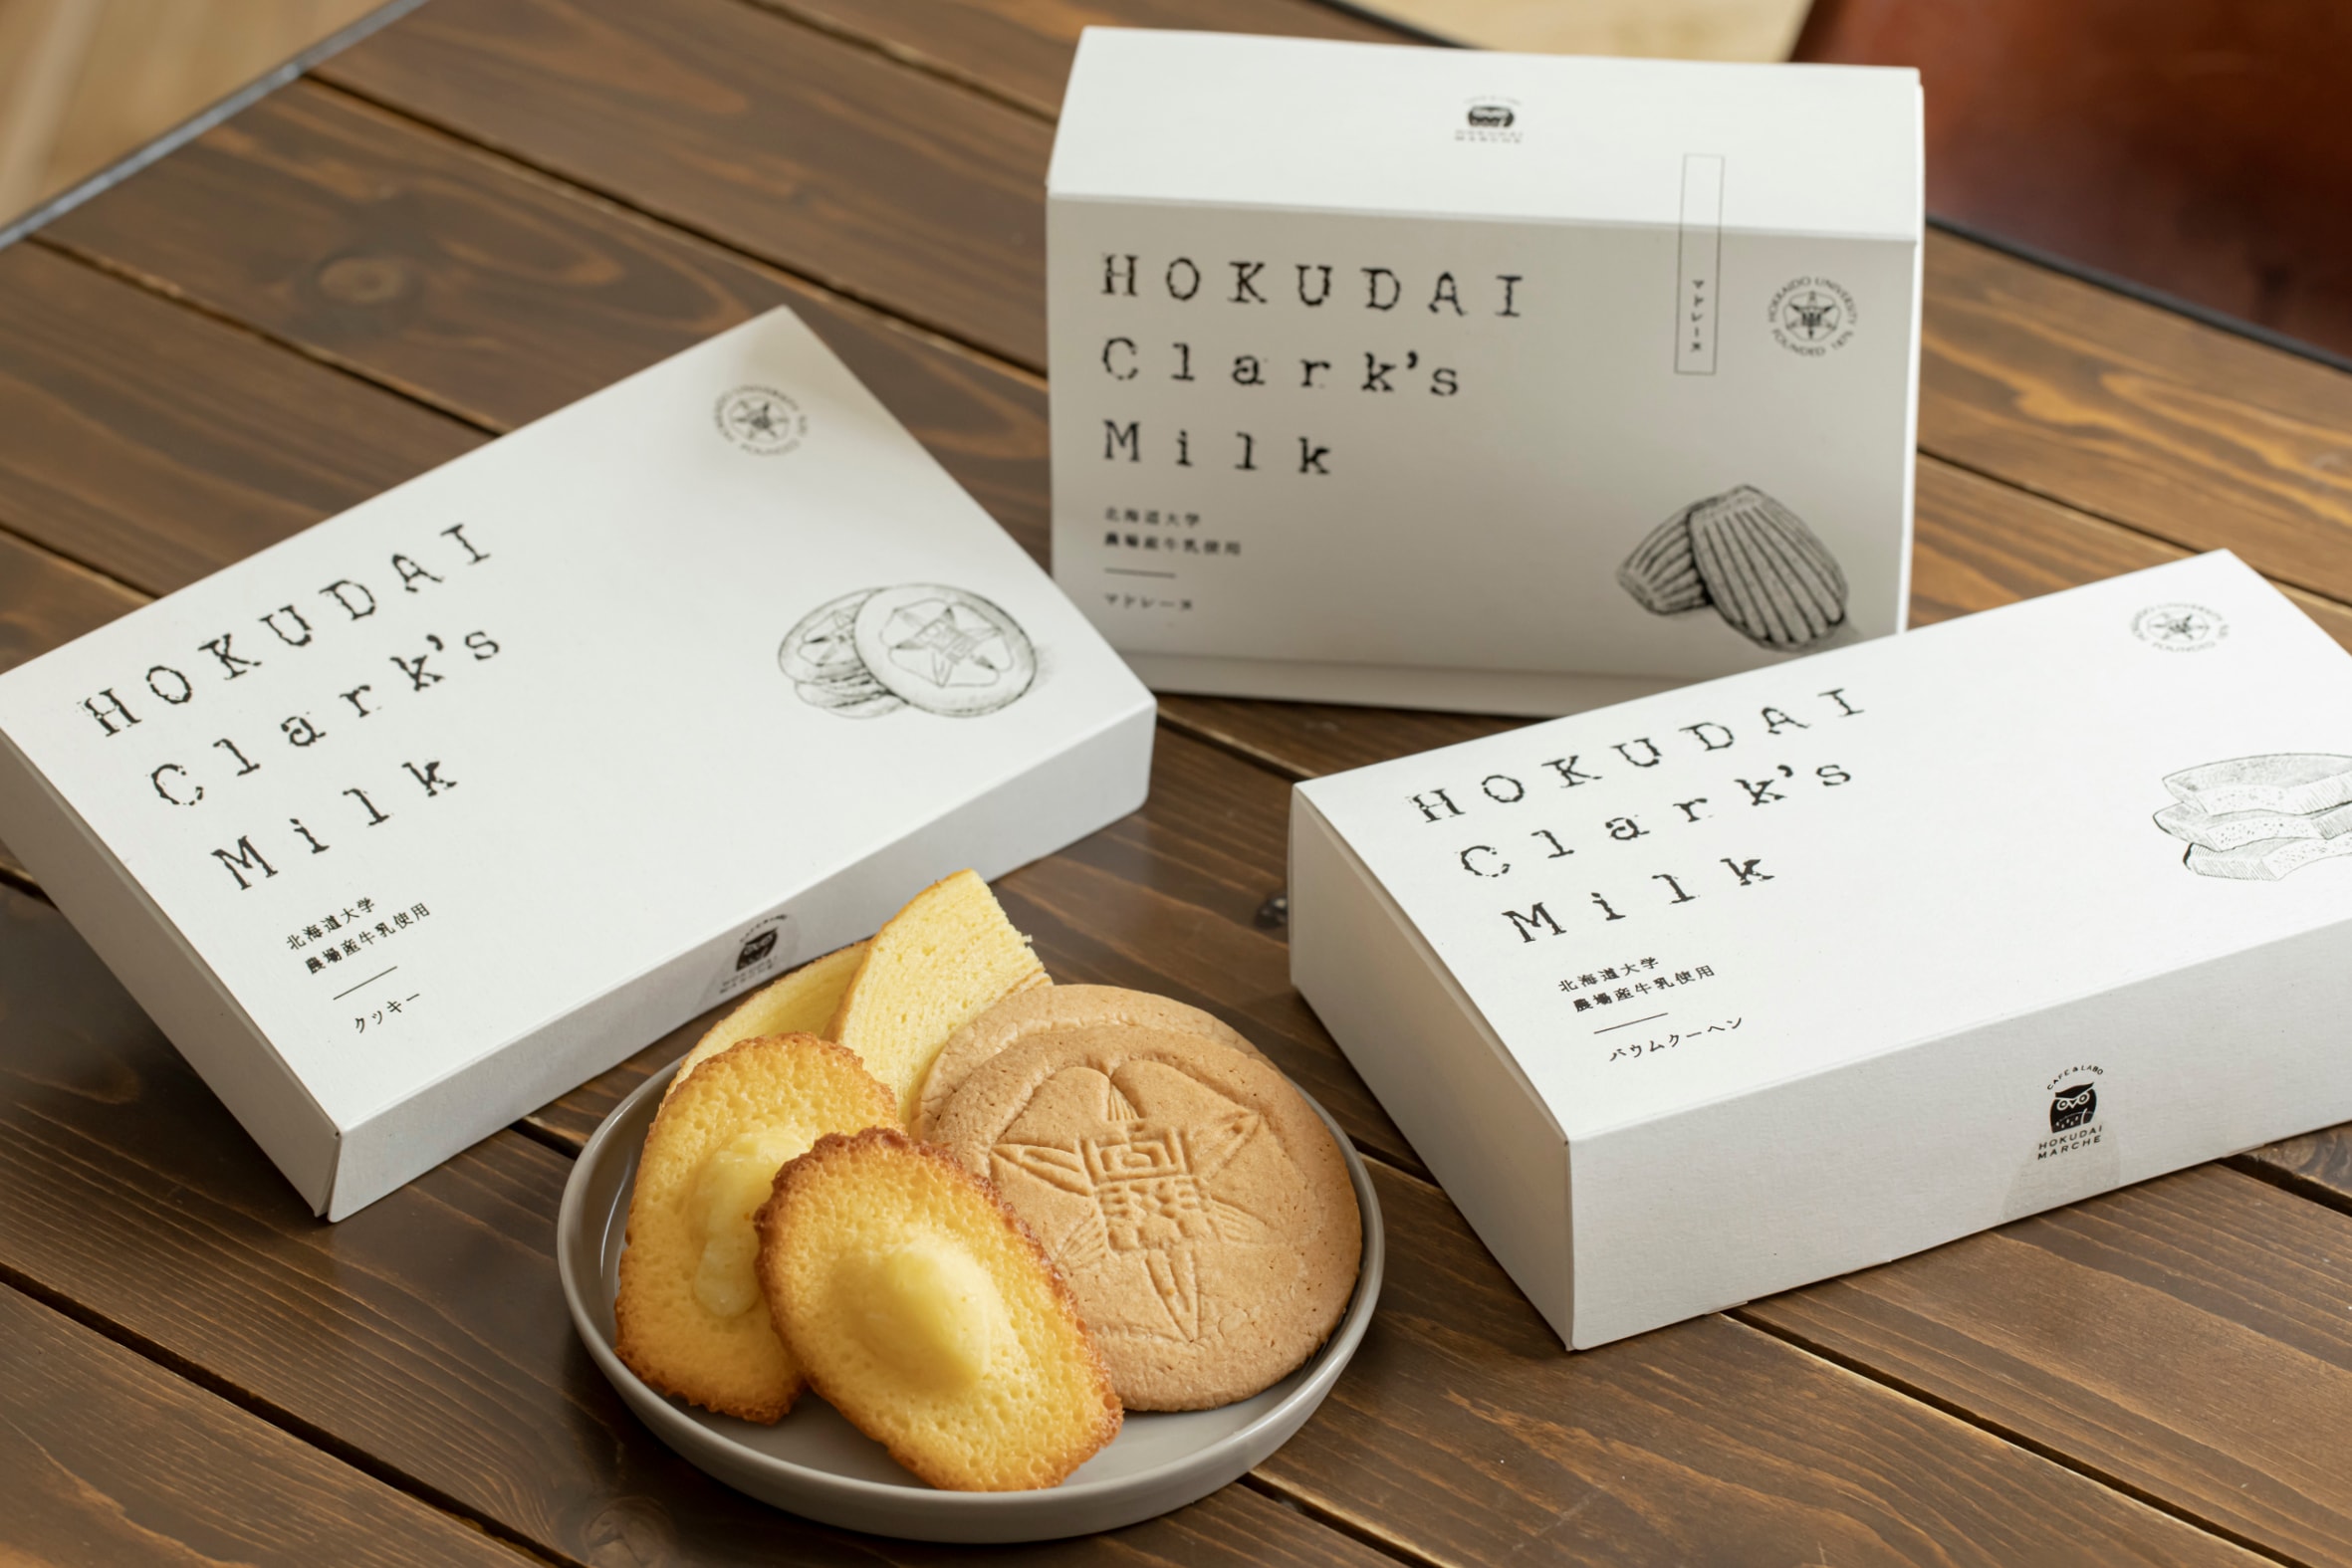 HOKUDAI Clark's Milk 焼き菓子3種セット,北大マルシェ Cafe & Laboの通販・お取り寄せ焼き菓子セット